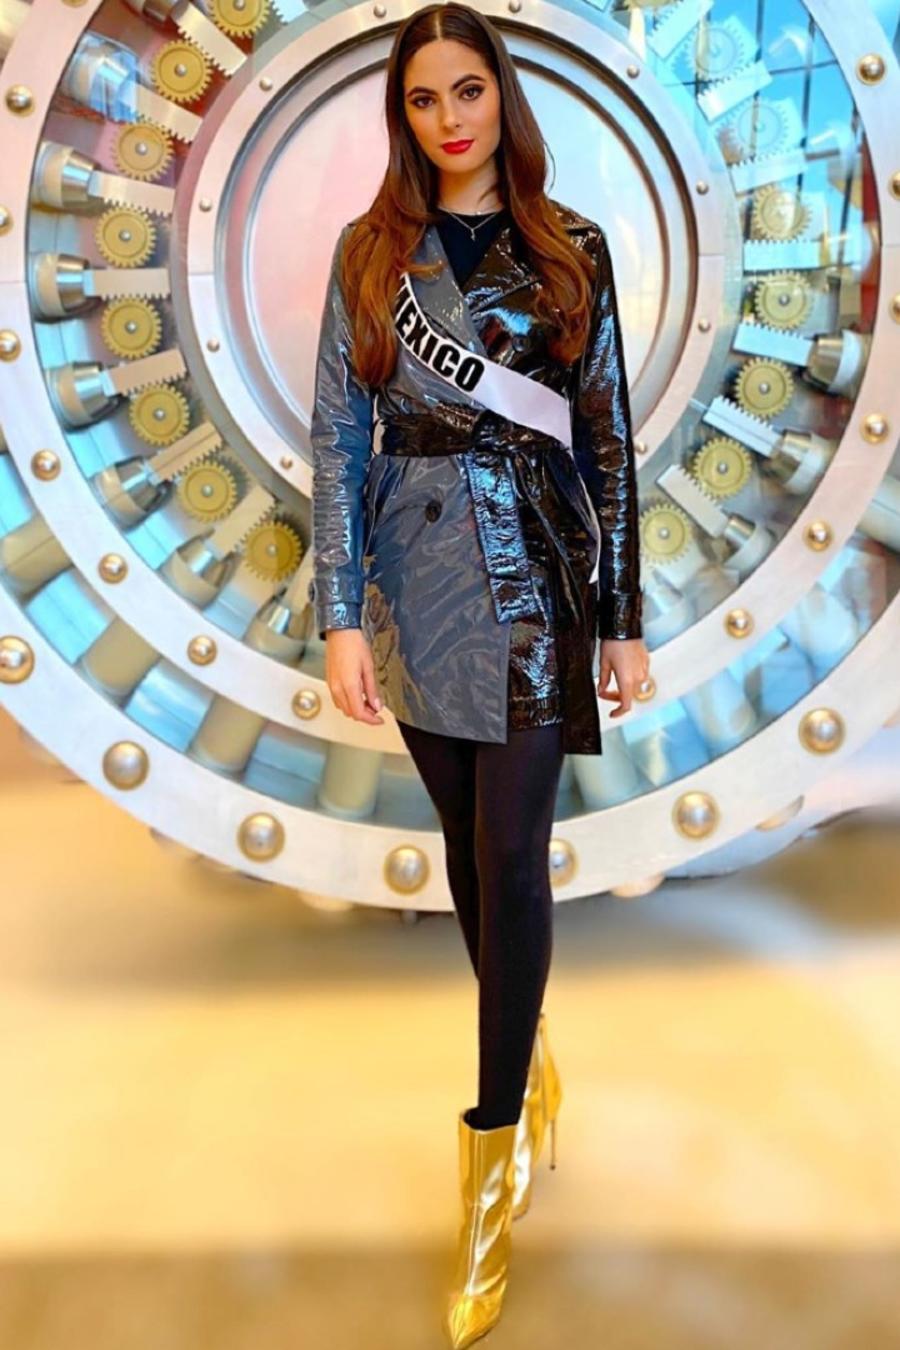 Sofía Aragón, Miss México 2019, Posando con atuendo metálico, Miss Universo 2019